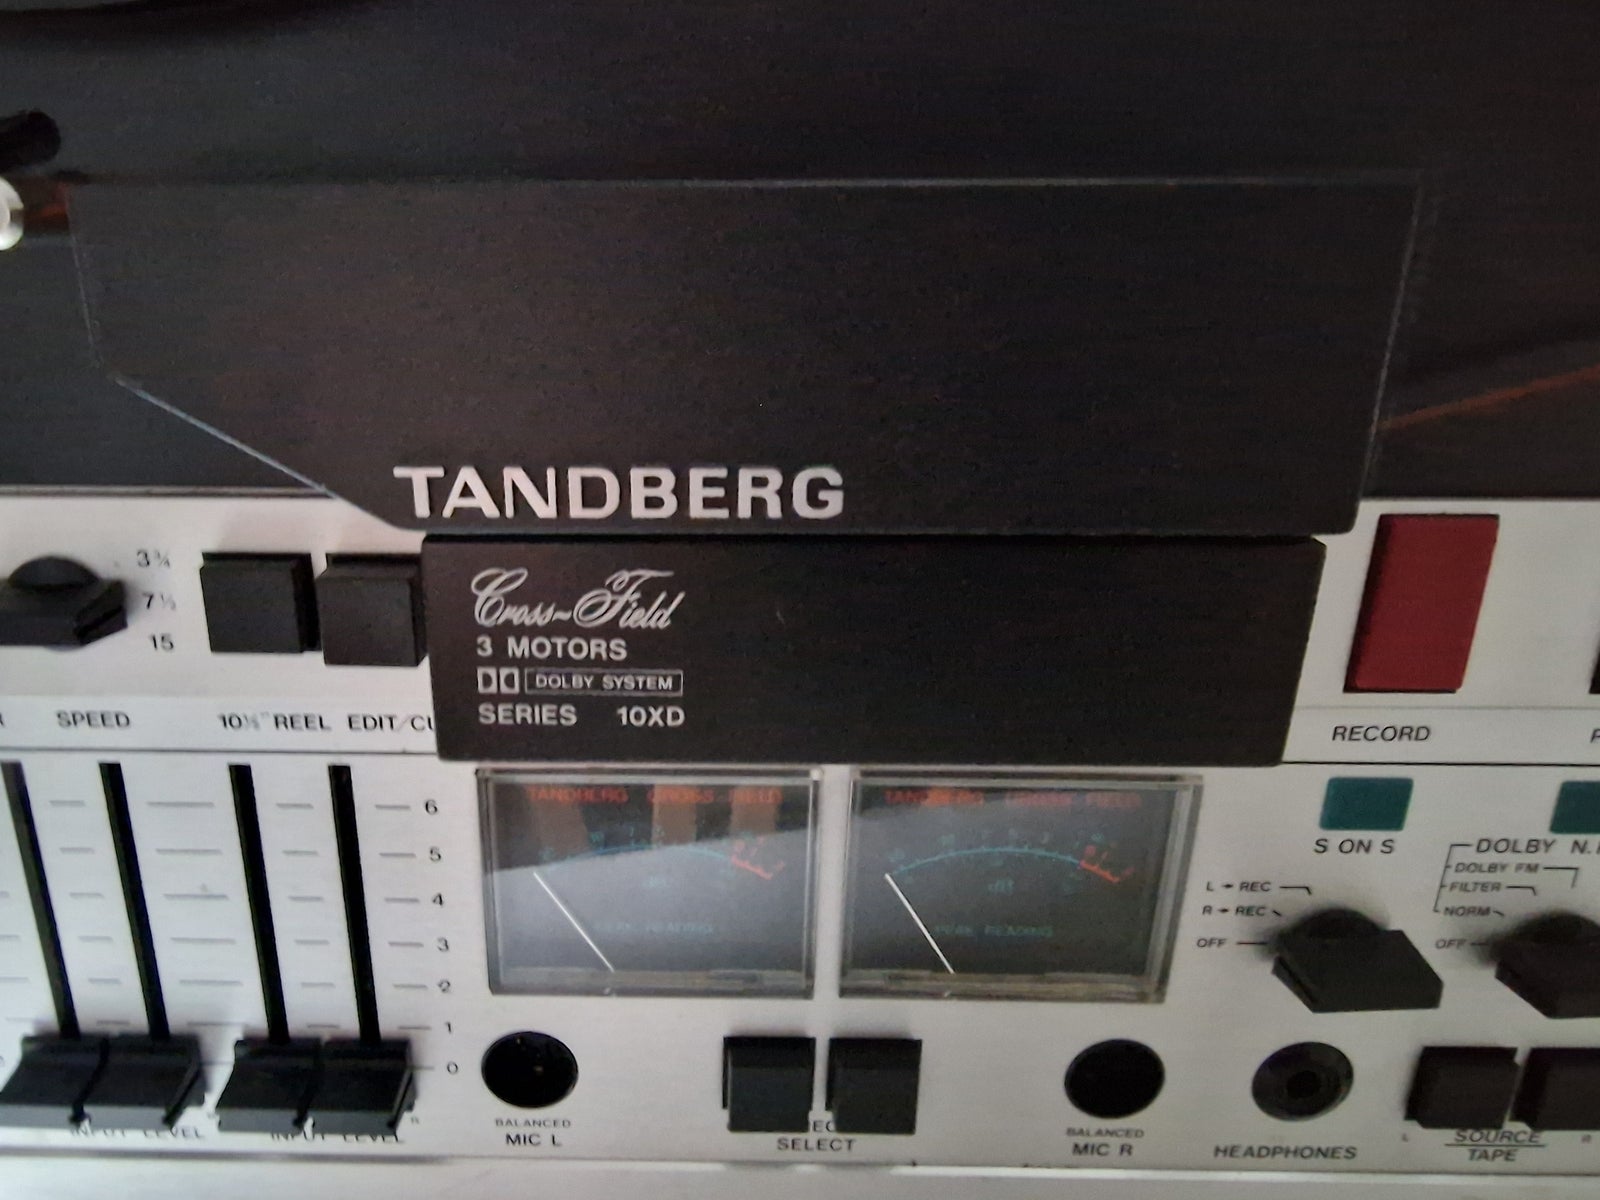 Spolebåndoptager, Tandberg, 10 xd